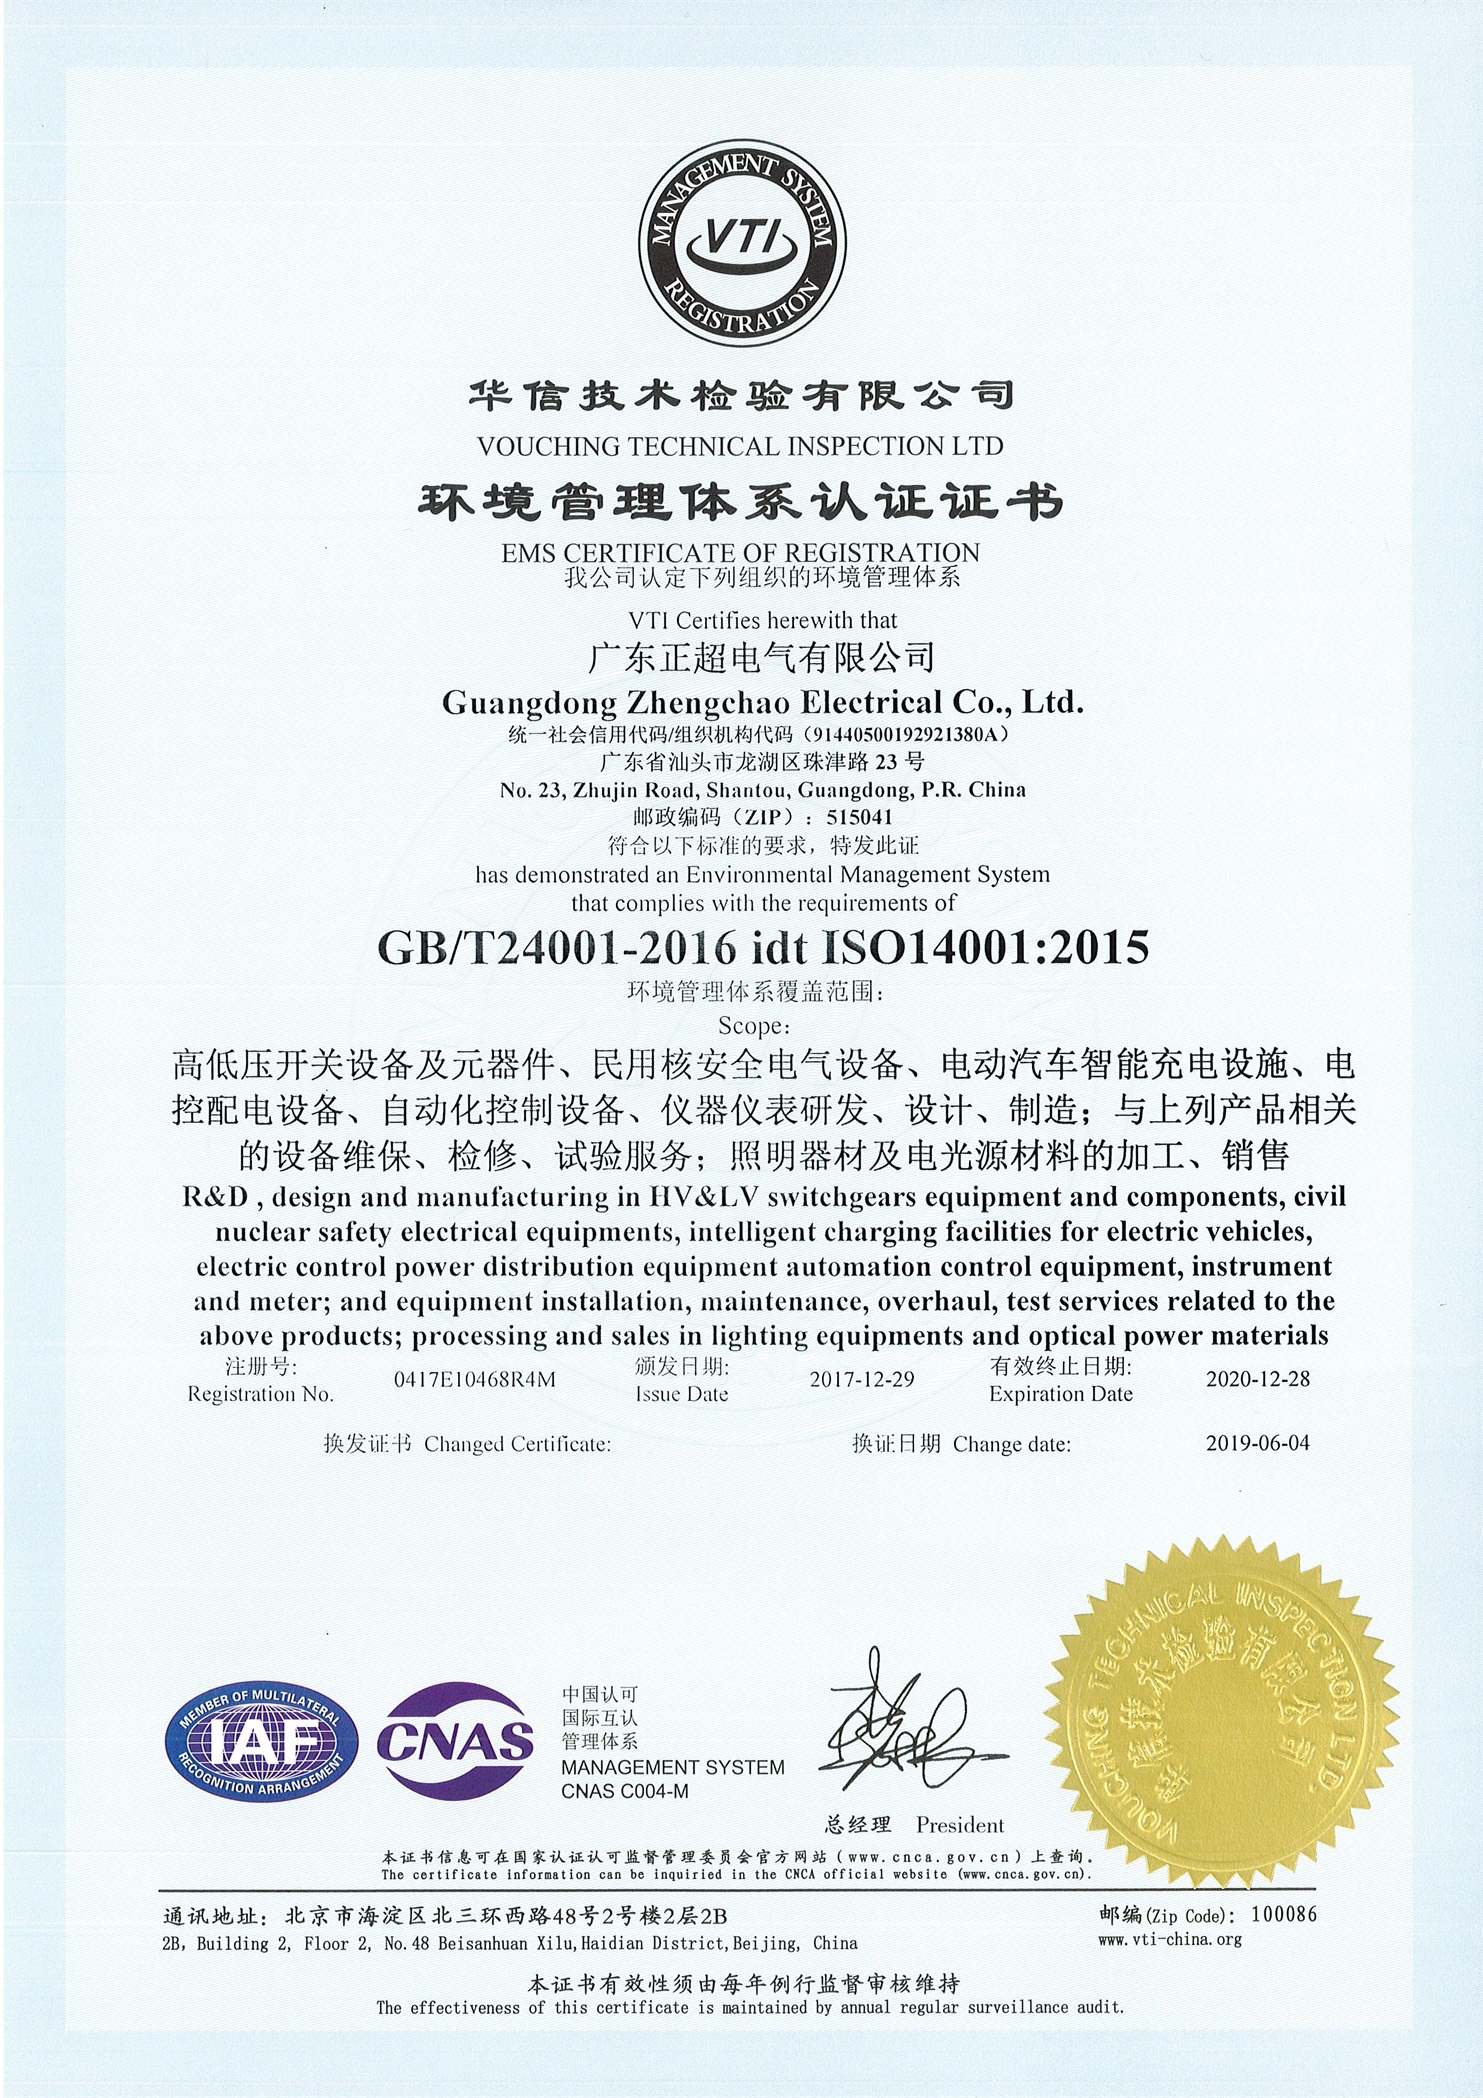 EMS Certificate of registration